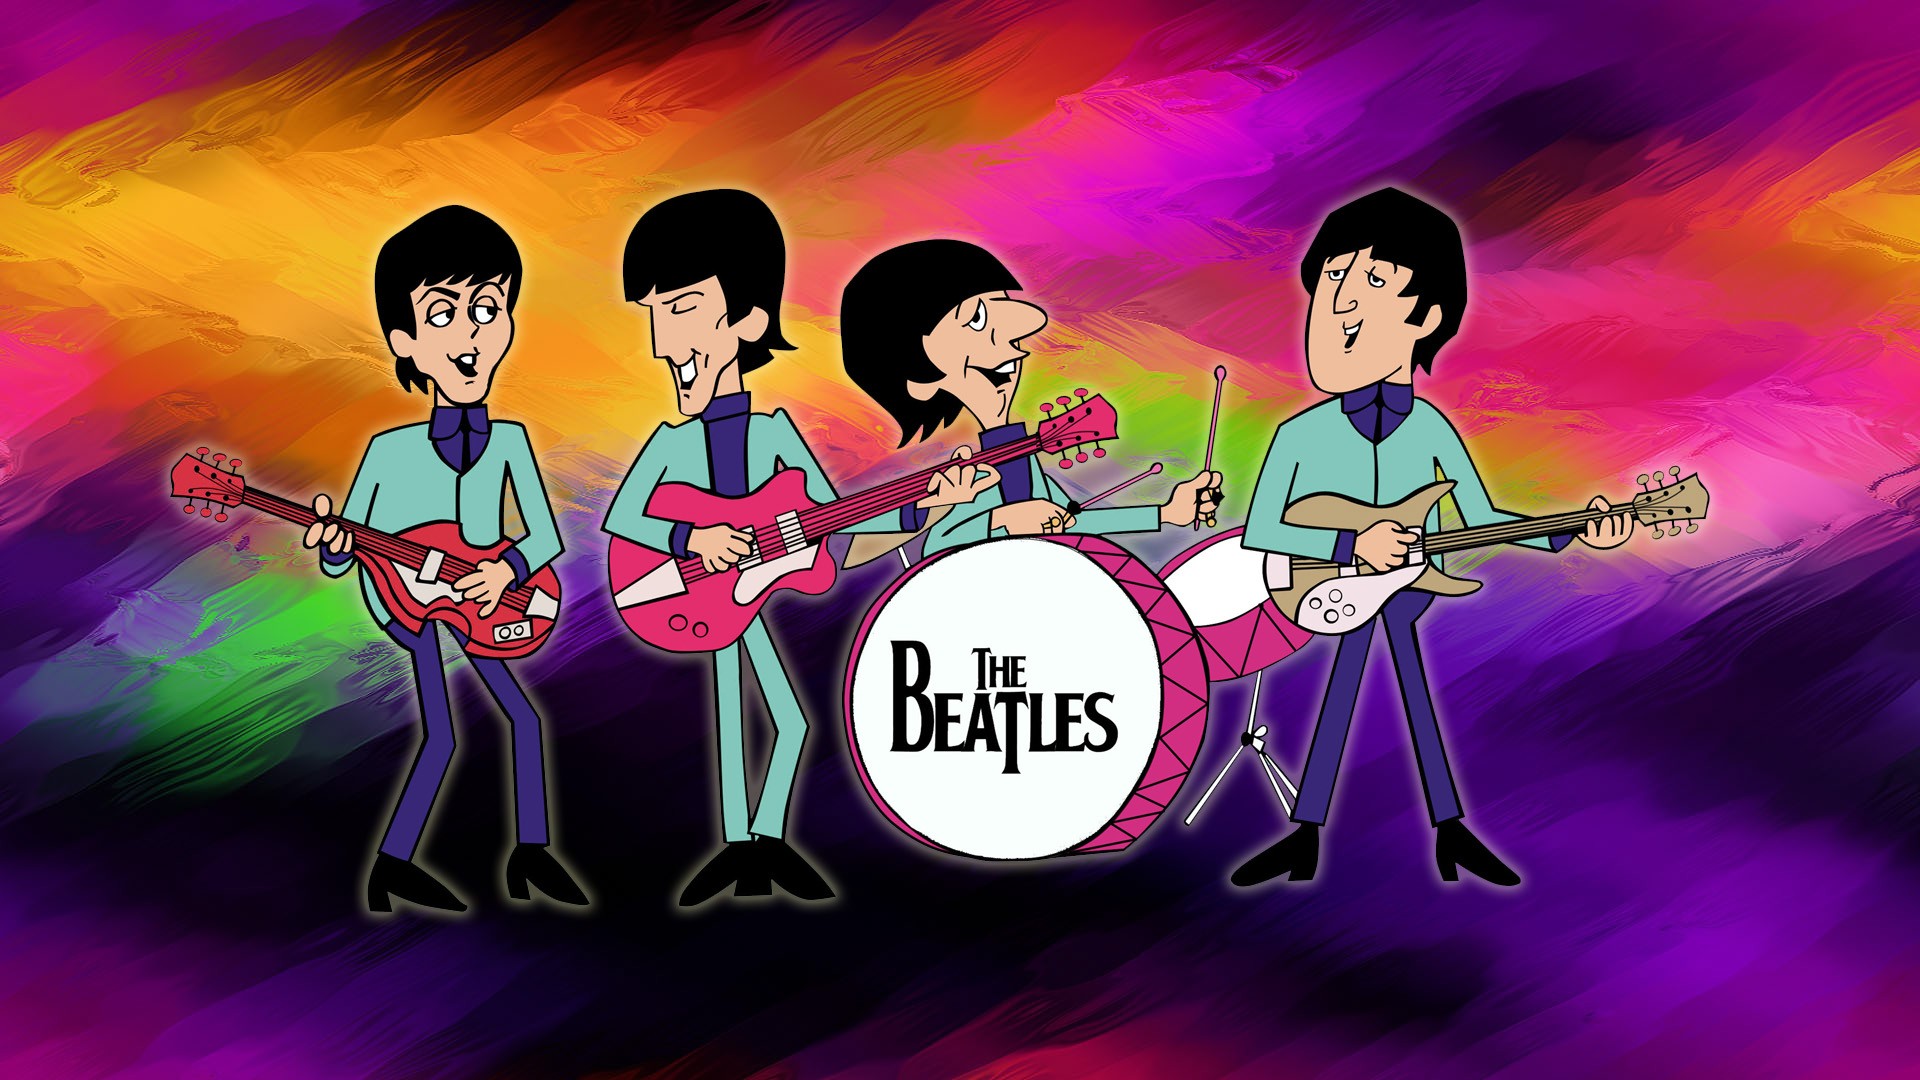 The Beatles Image Desktop Wallpaper Photos